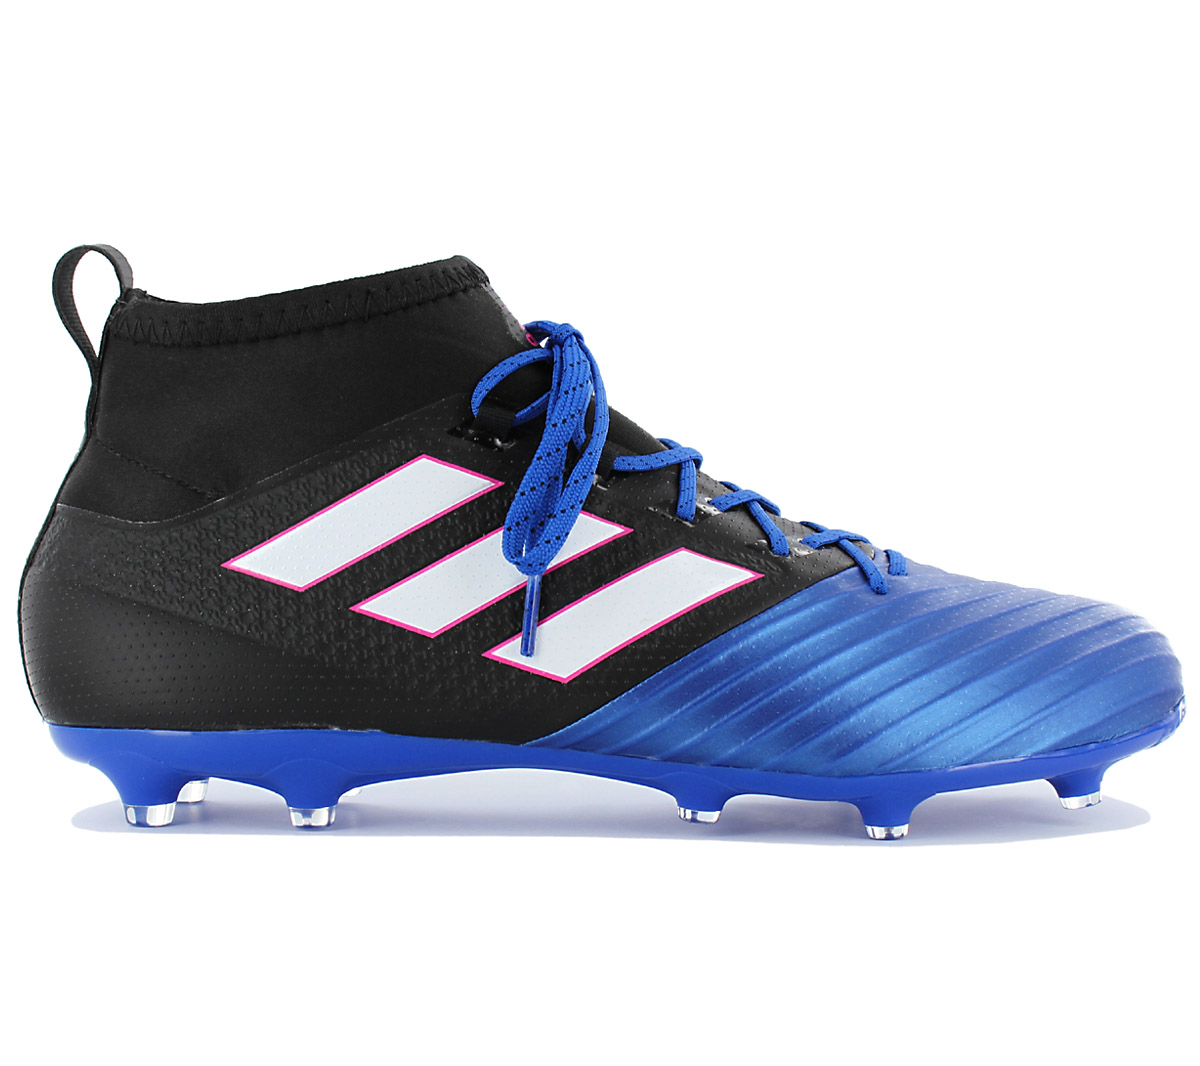 Adidas Ace 17.2 Primemesh Fg Men's Football Boots Black Studs New 